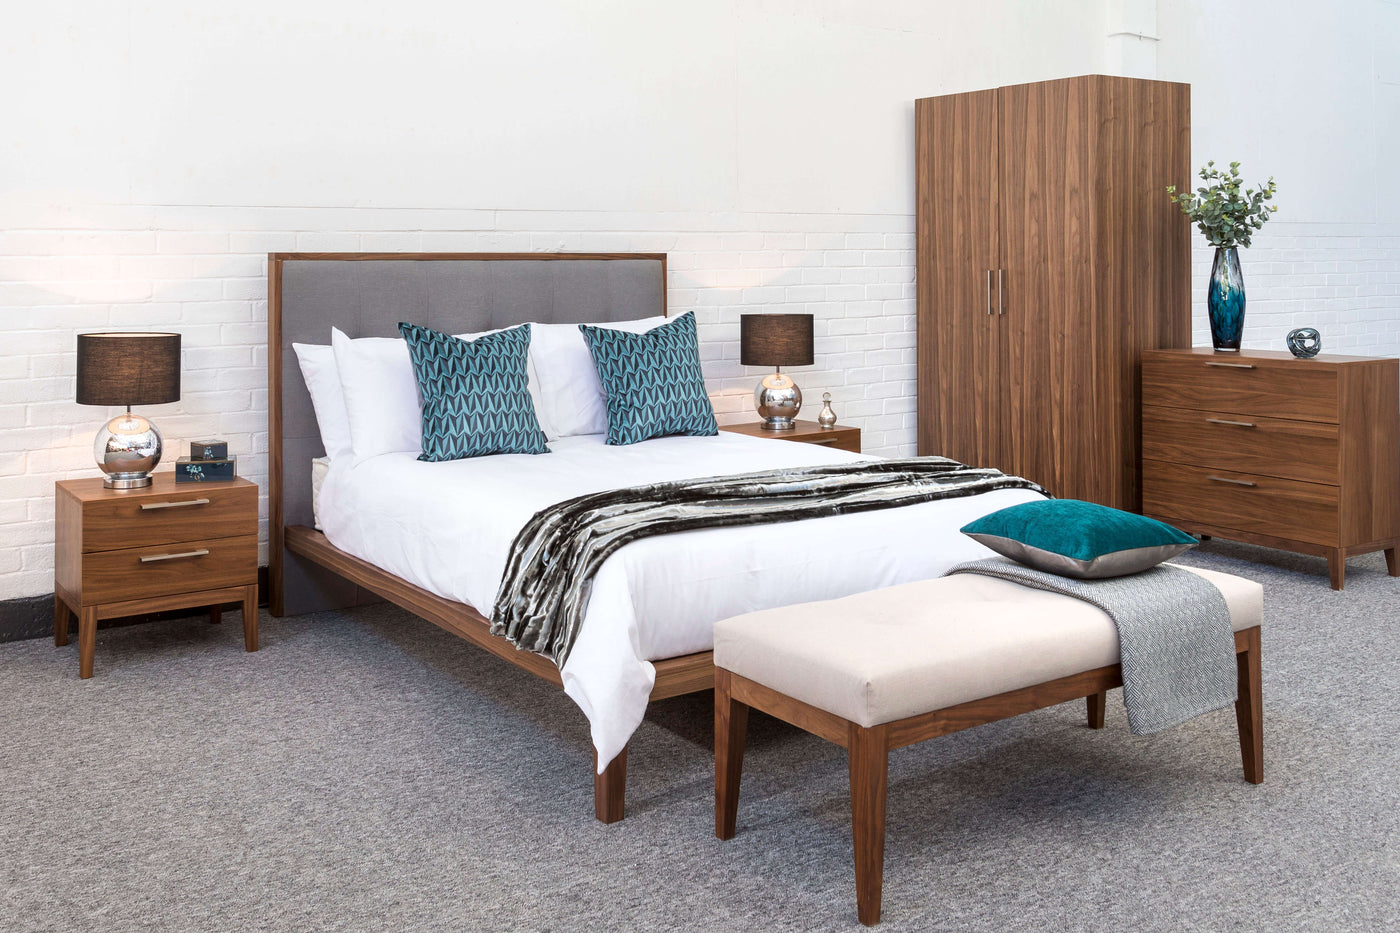 Italian Furniture inspired bedroom collections from Twenty10 Designs UK